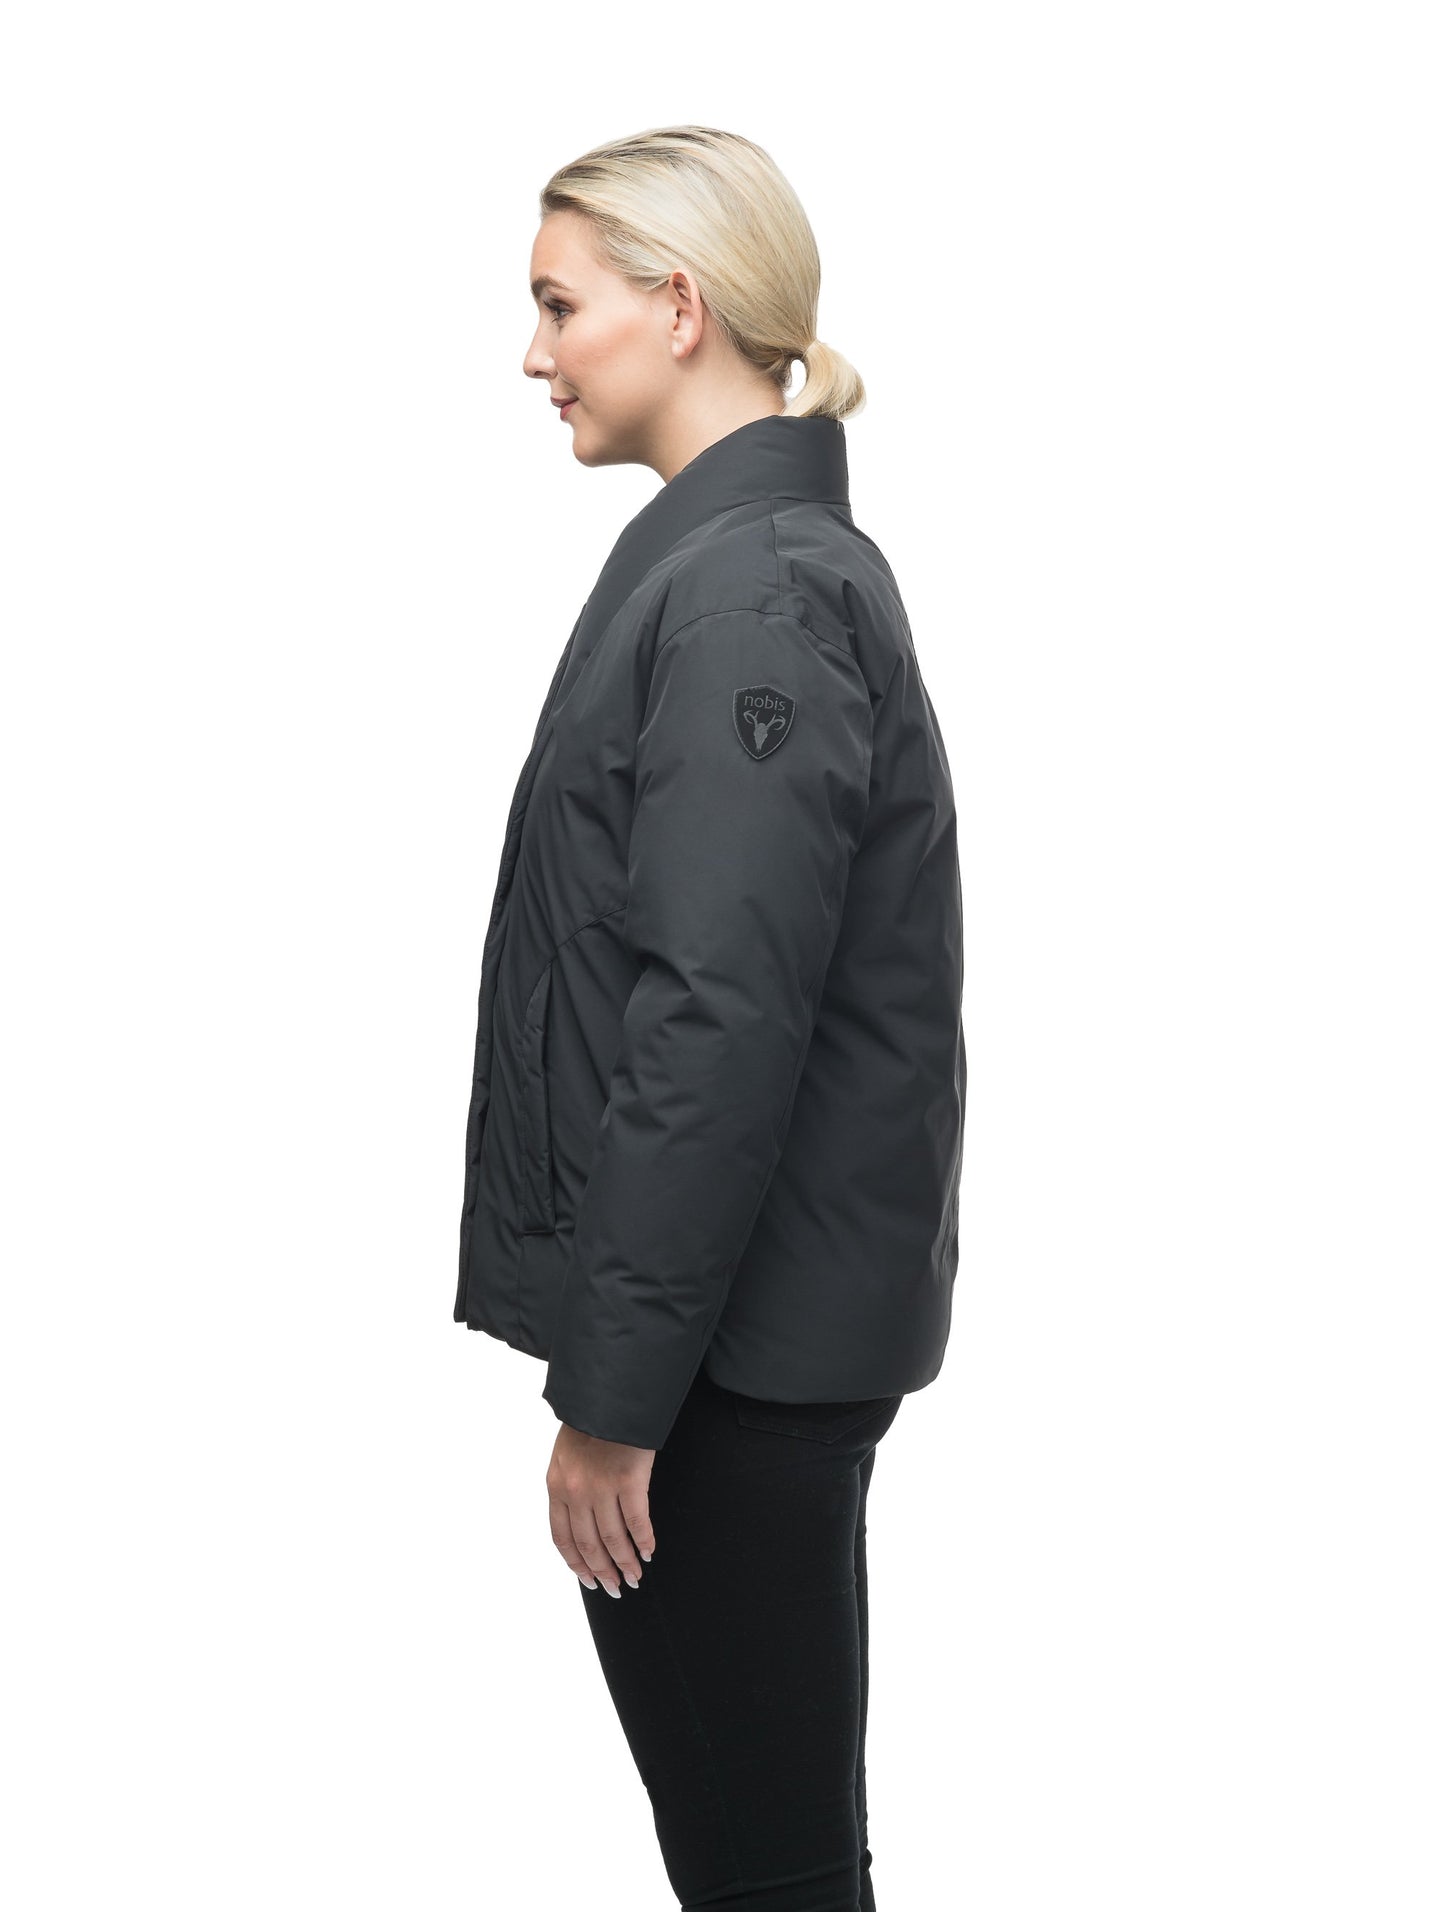 Hip Length Women's Lightweight Jacket in Black or Camo